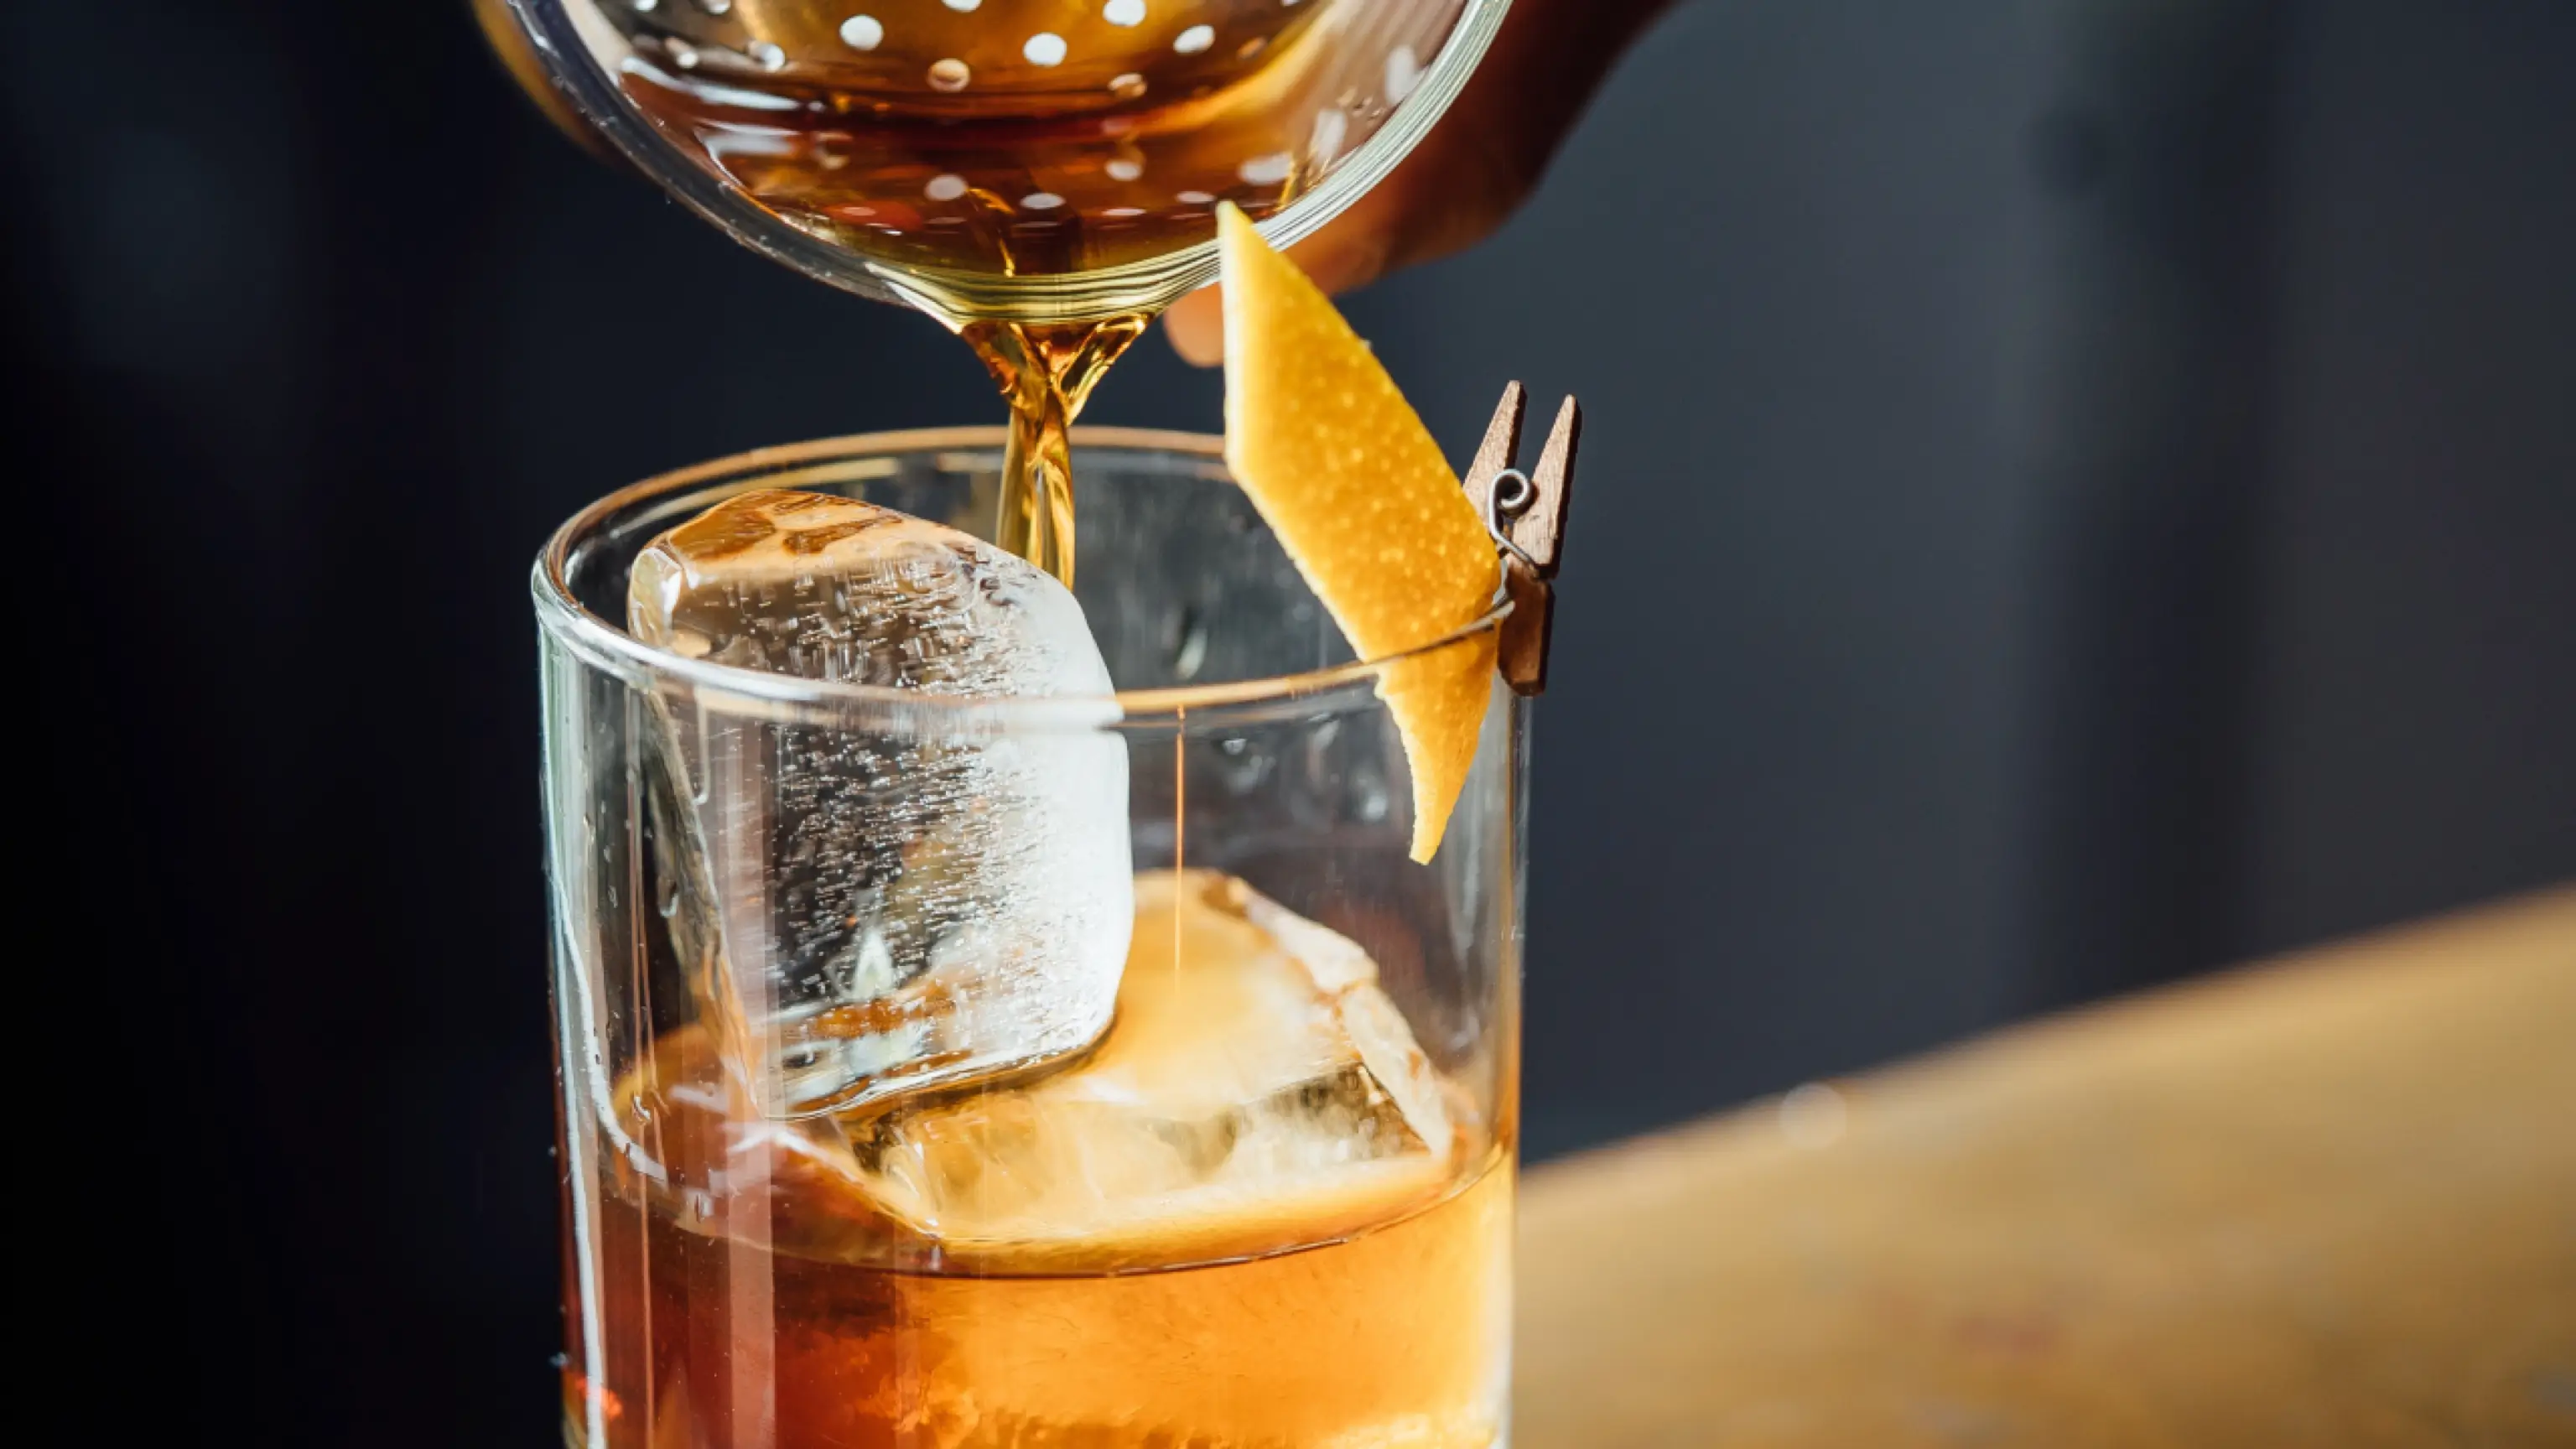 Pitcher pouring Sazerac brand Manhattan cocktail into glass with ice and orange slice